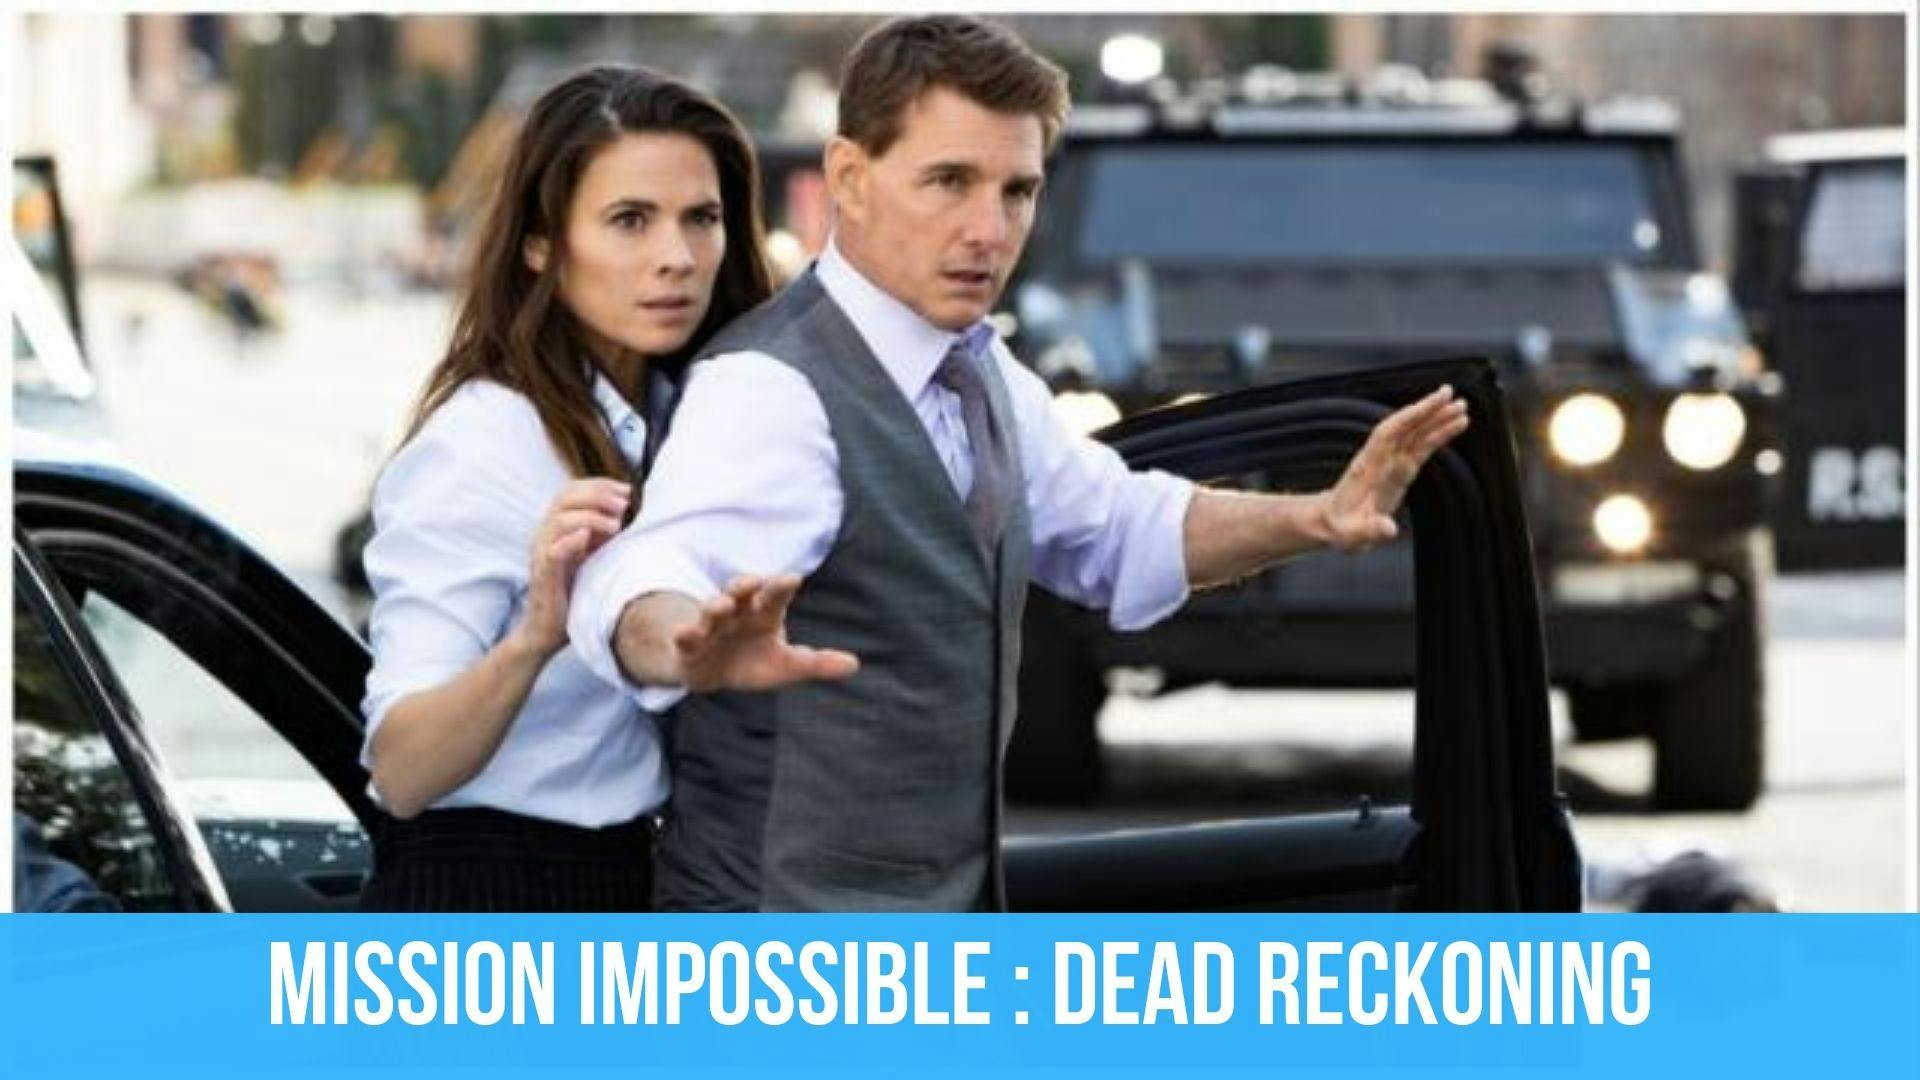 poster du film Mission impossible : Dead Rockoning avec Tom Cruise